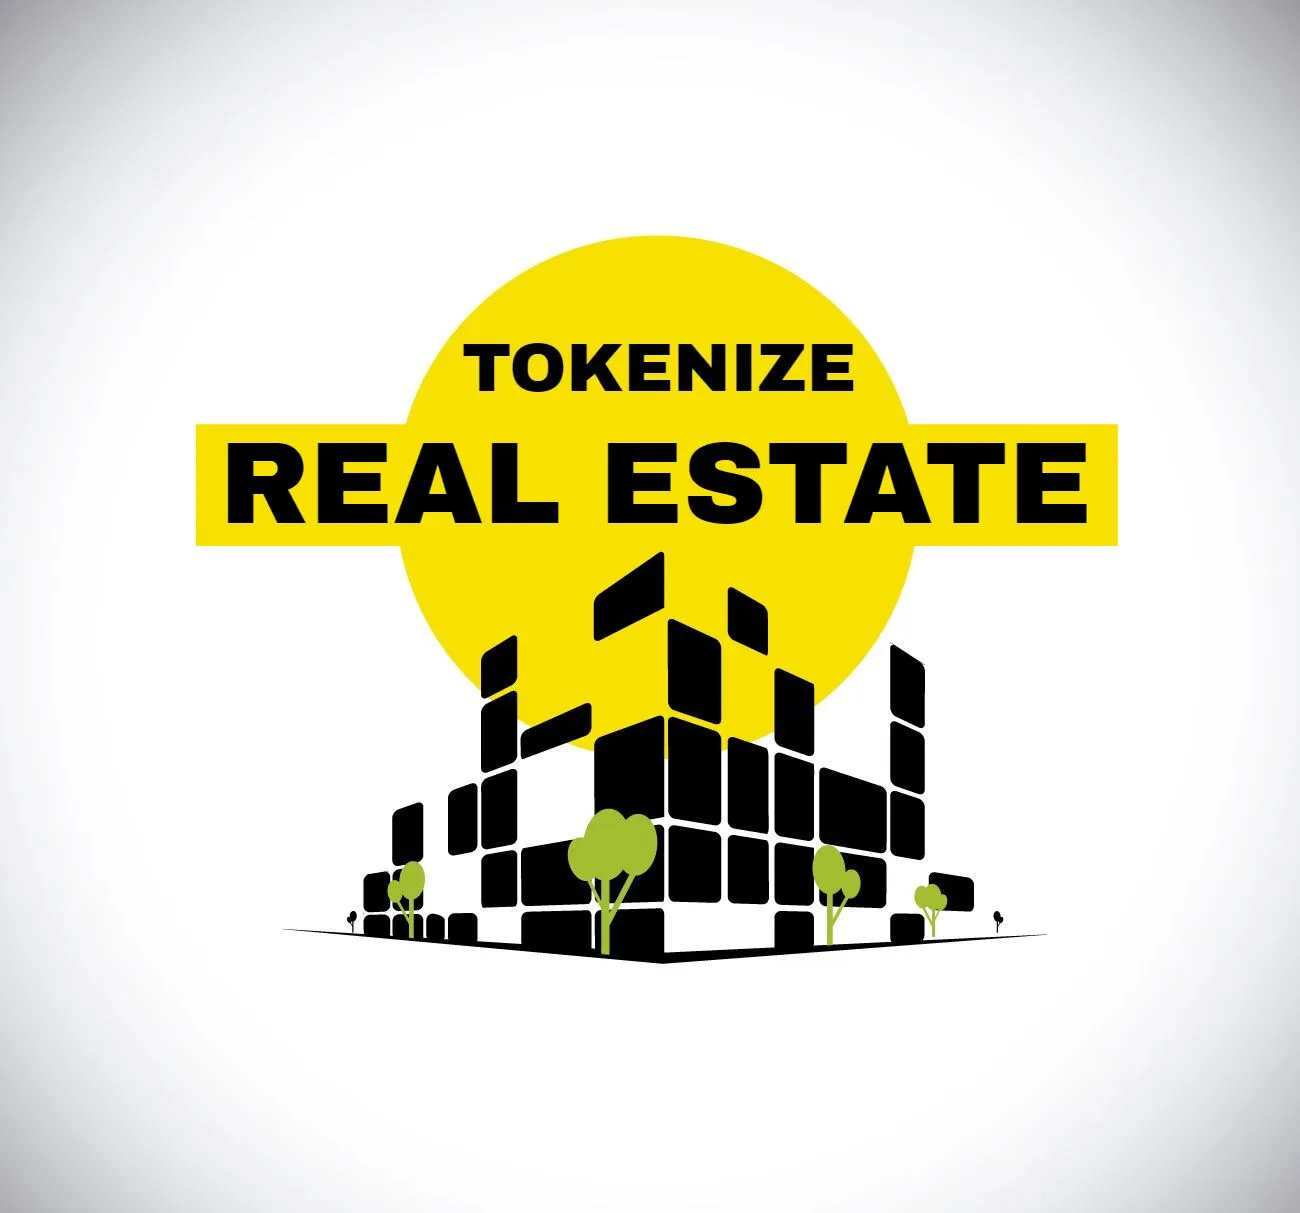 Tokenize Real Estate - Real Estate Tokenization